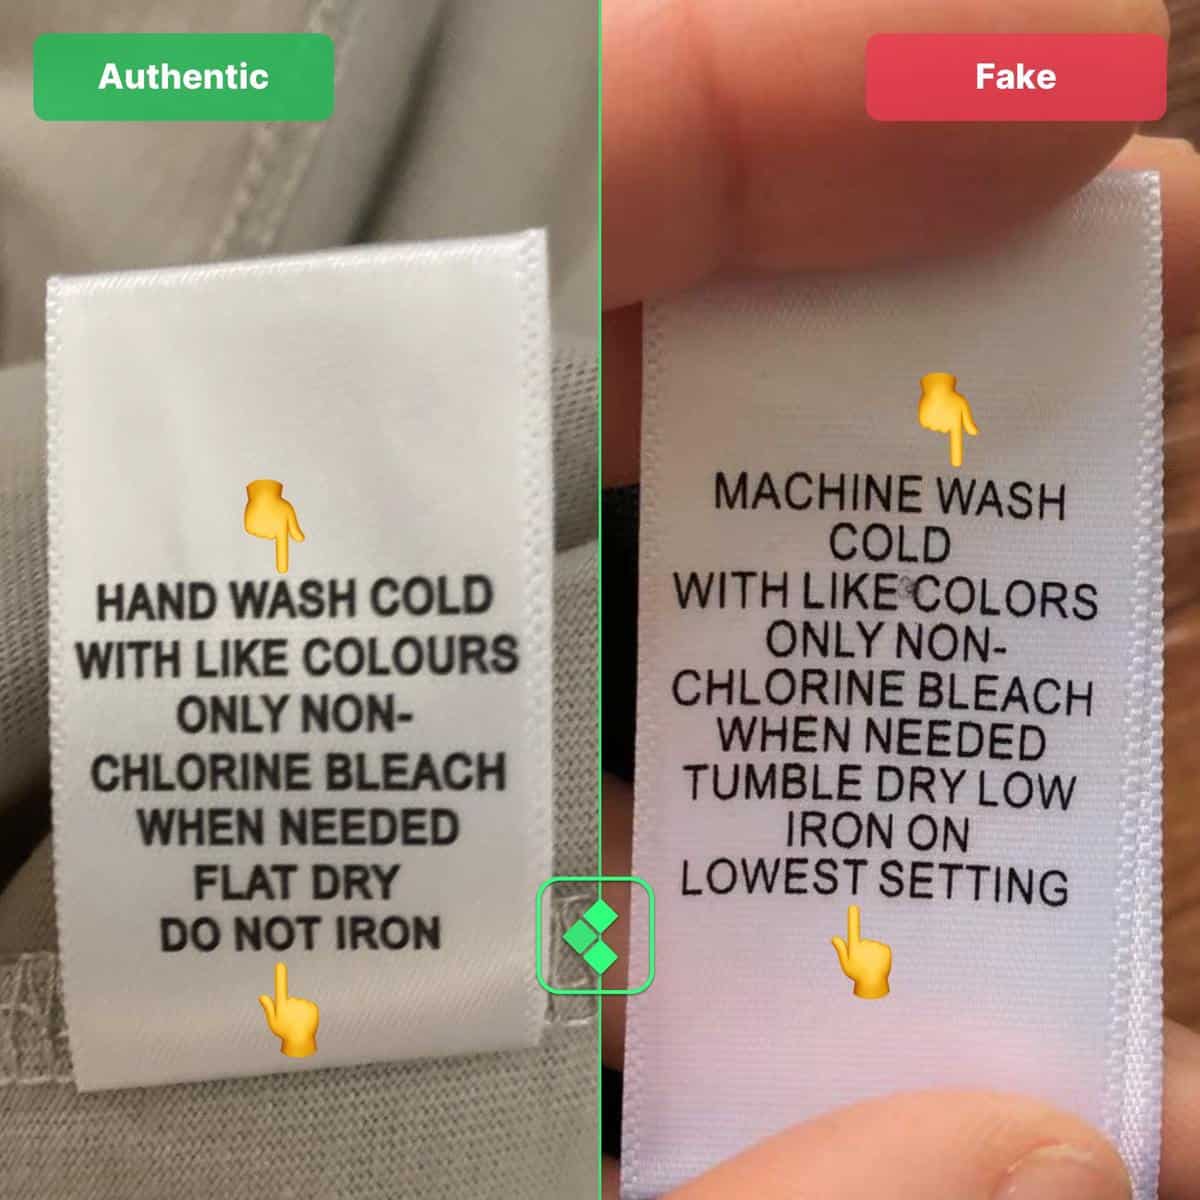 Step 2.1: Fake vs real FOG Essentials hoodie second wash tag